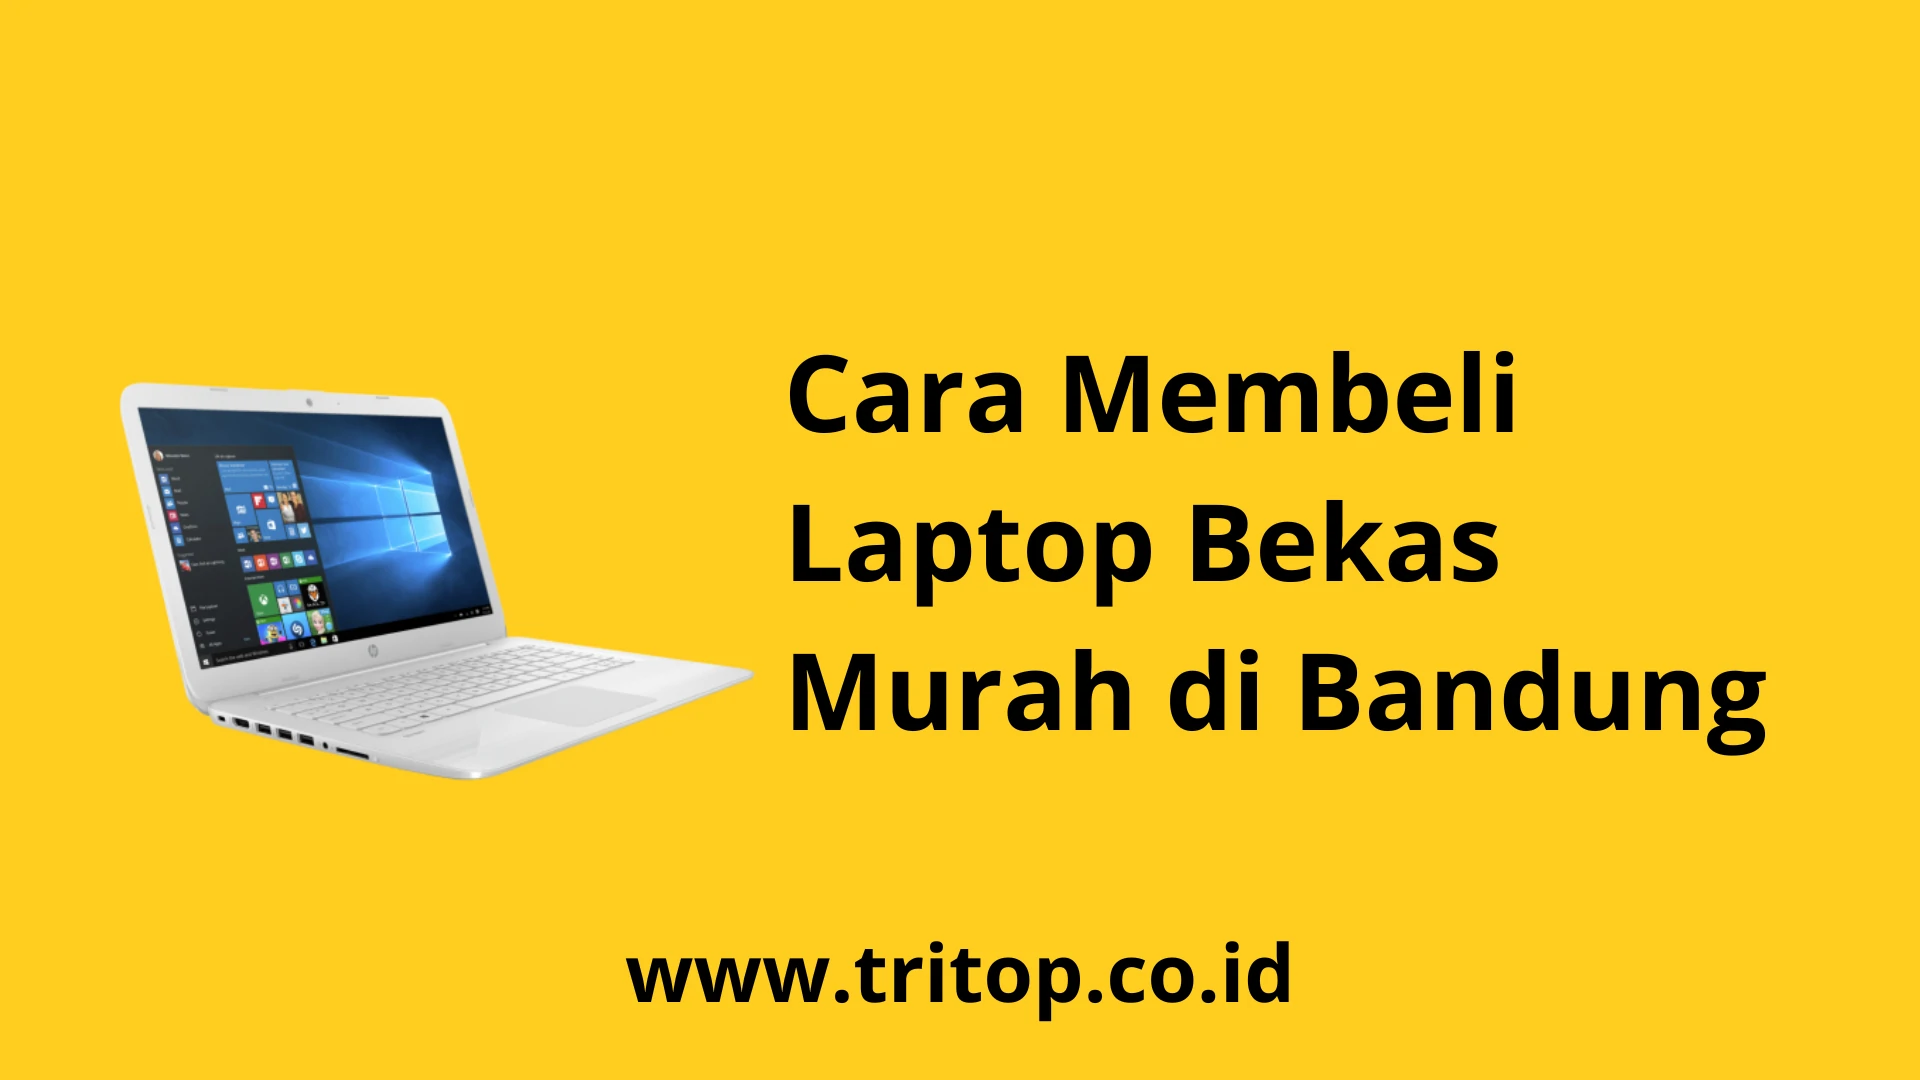 Laptop Bekas Murah Bandung Tritop.co.id